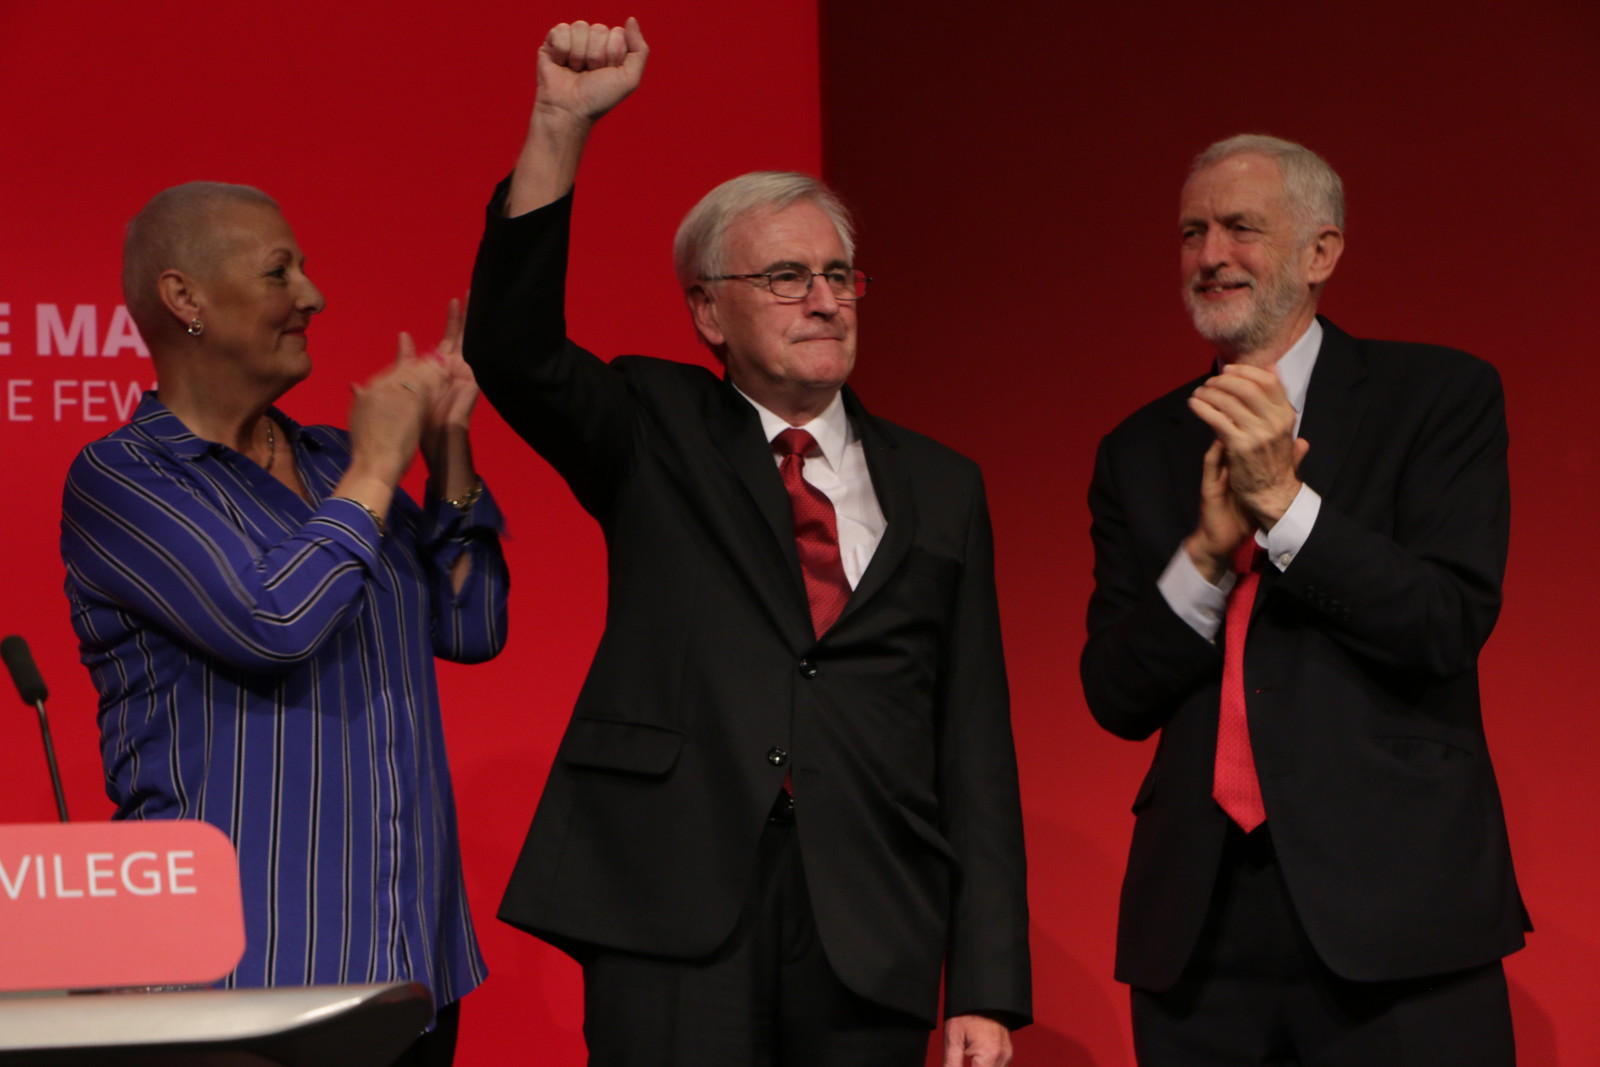 Labour conference 2019